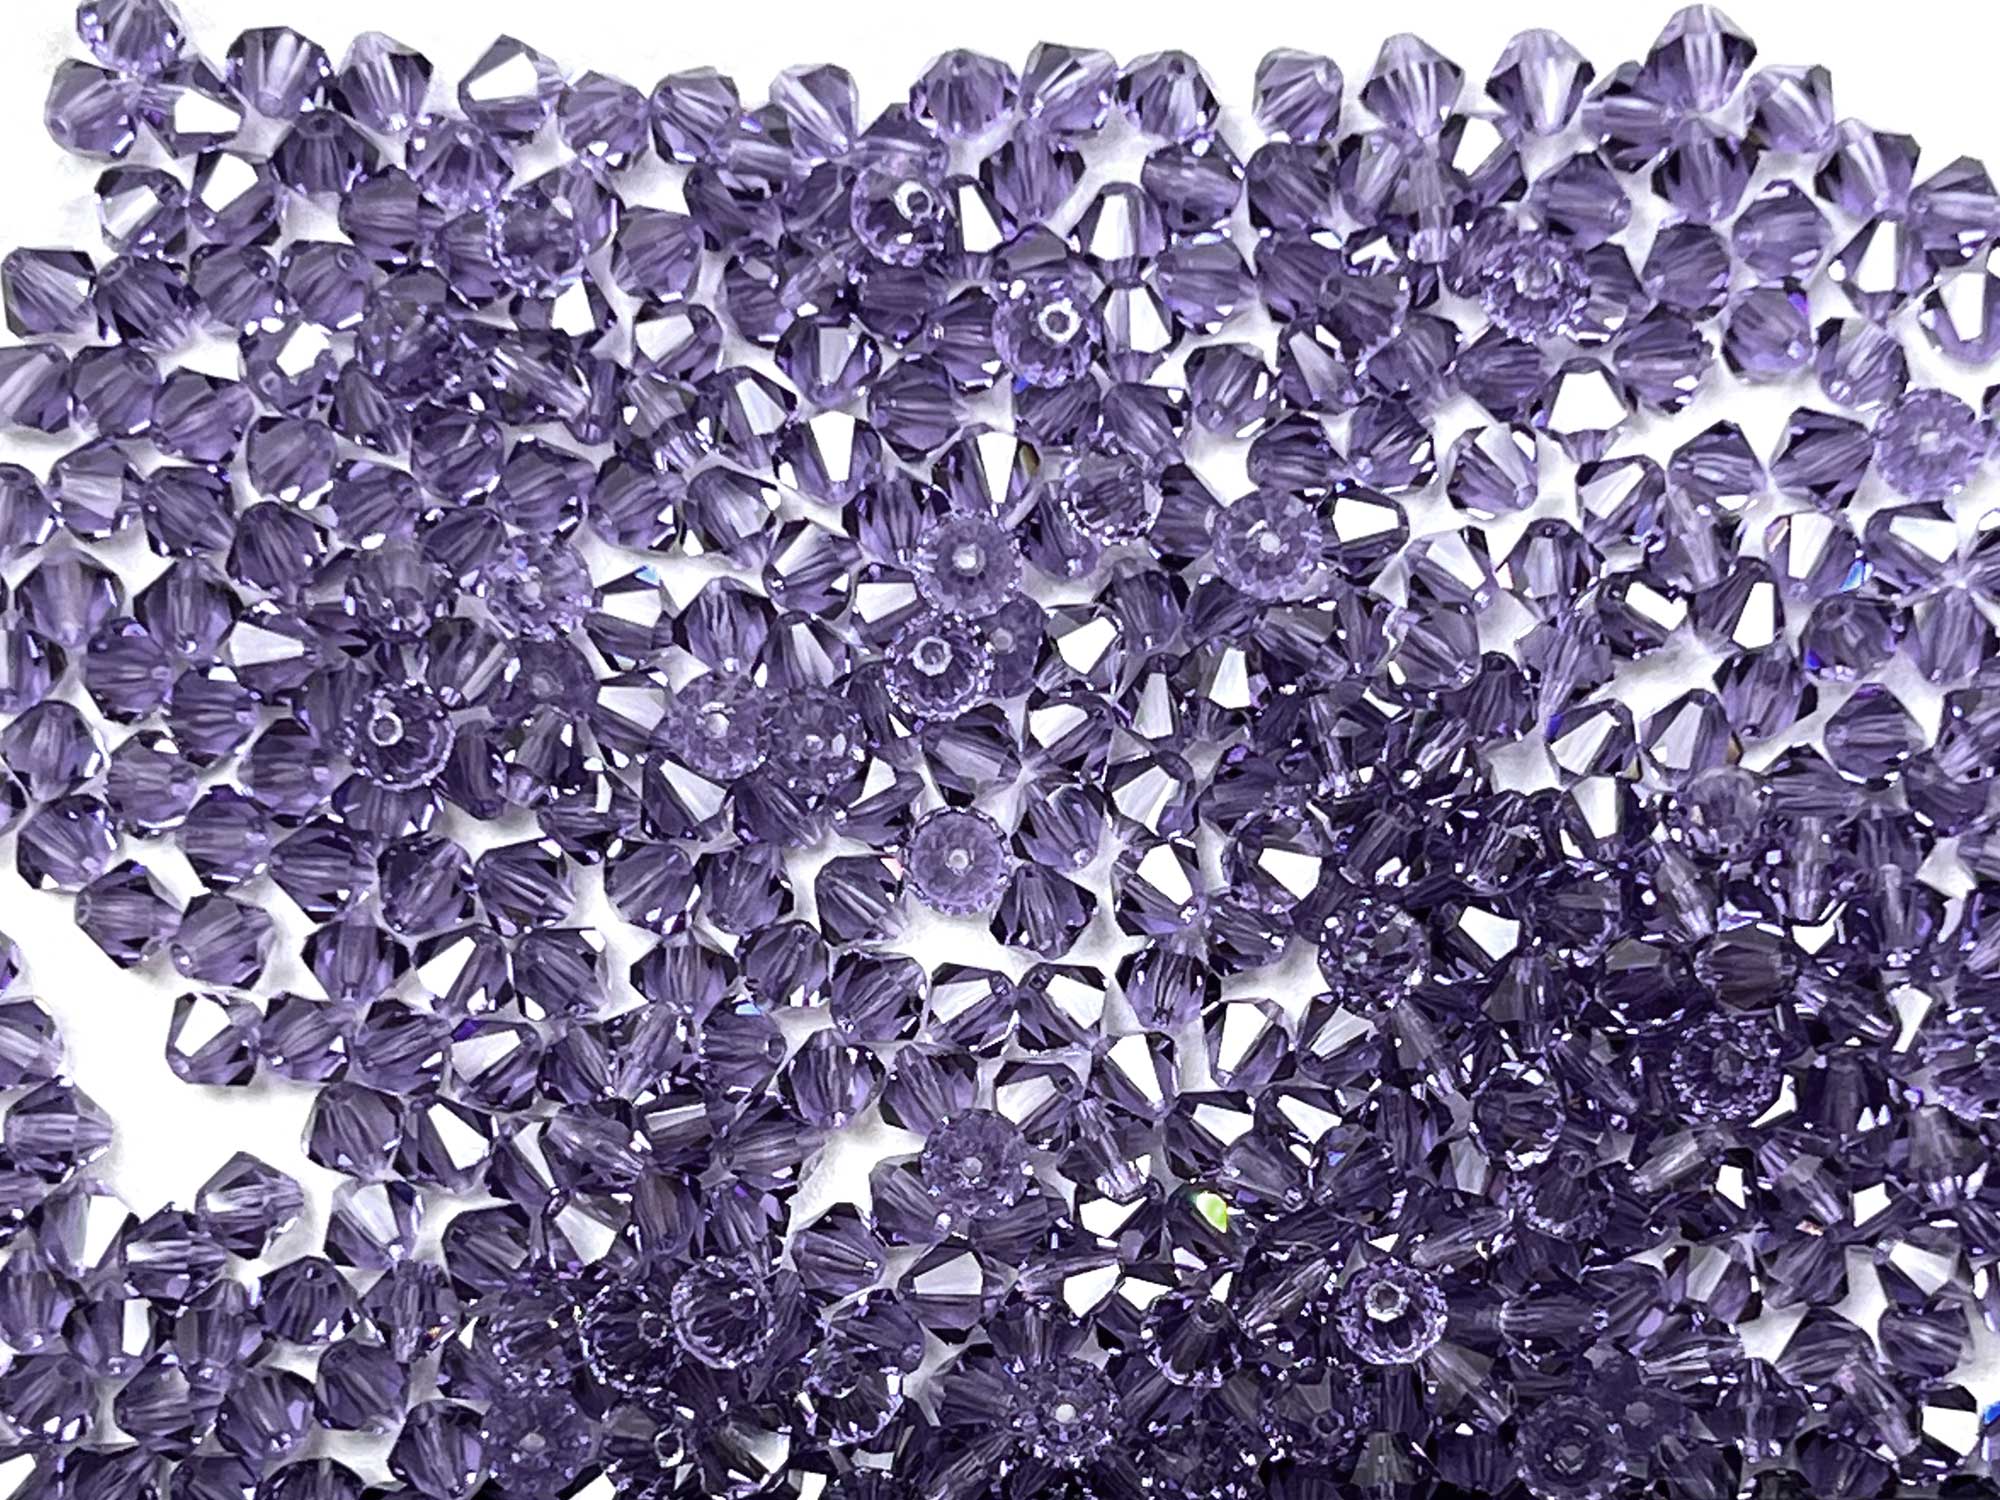 Tanzanite Preciosa Czech Glass Beads Machine Cut Bicones (MC Rondell Diamond Shape) purple crystals 3mm 4mm 5mm 6mm 8mm